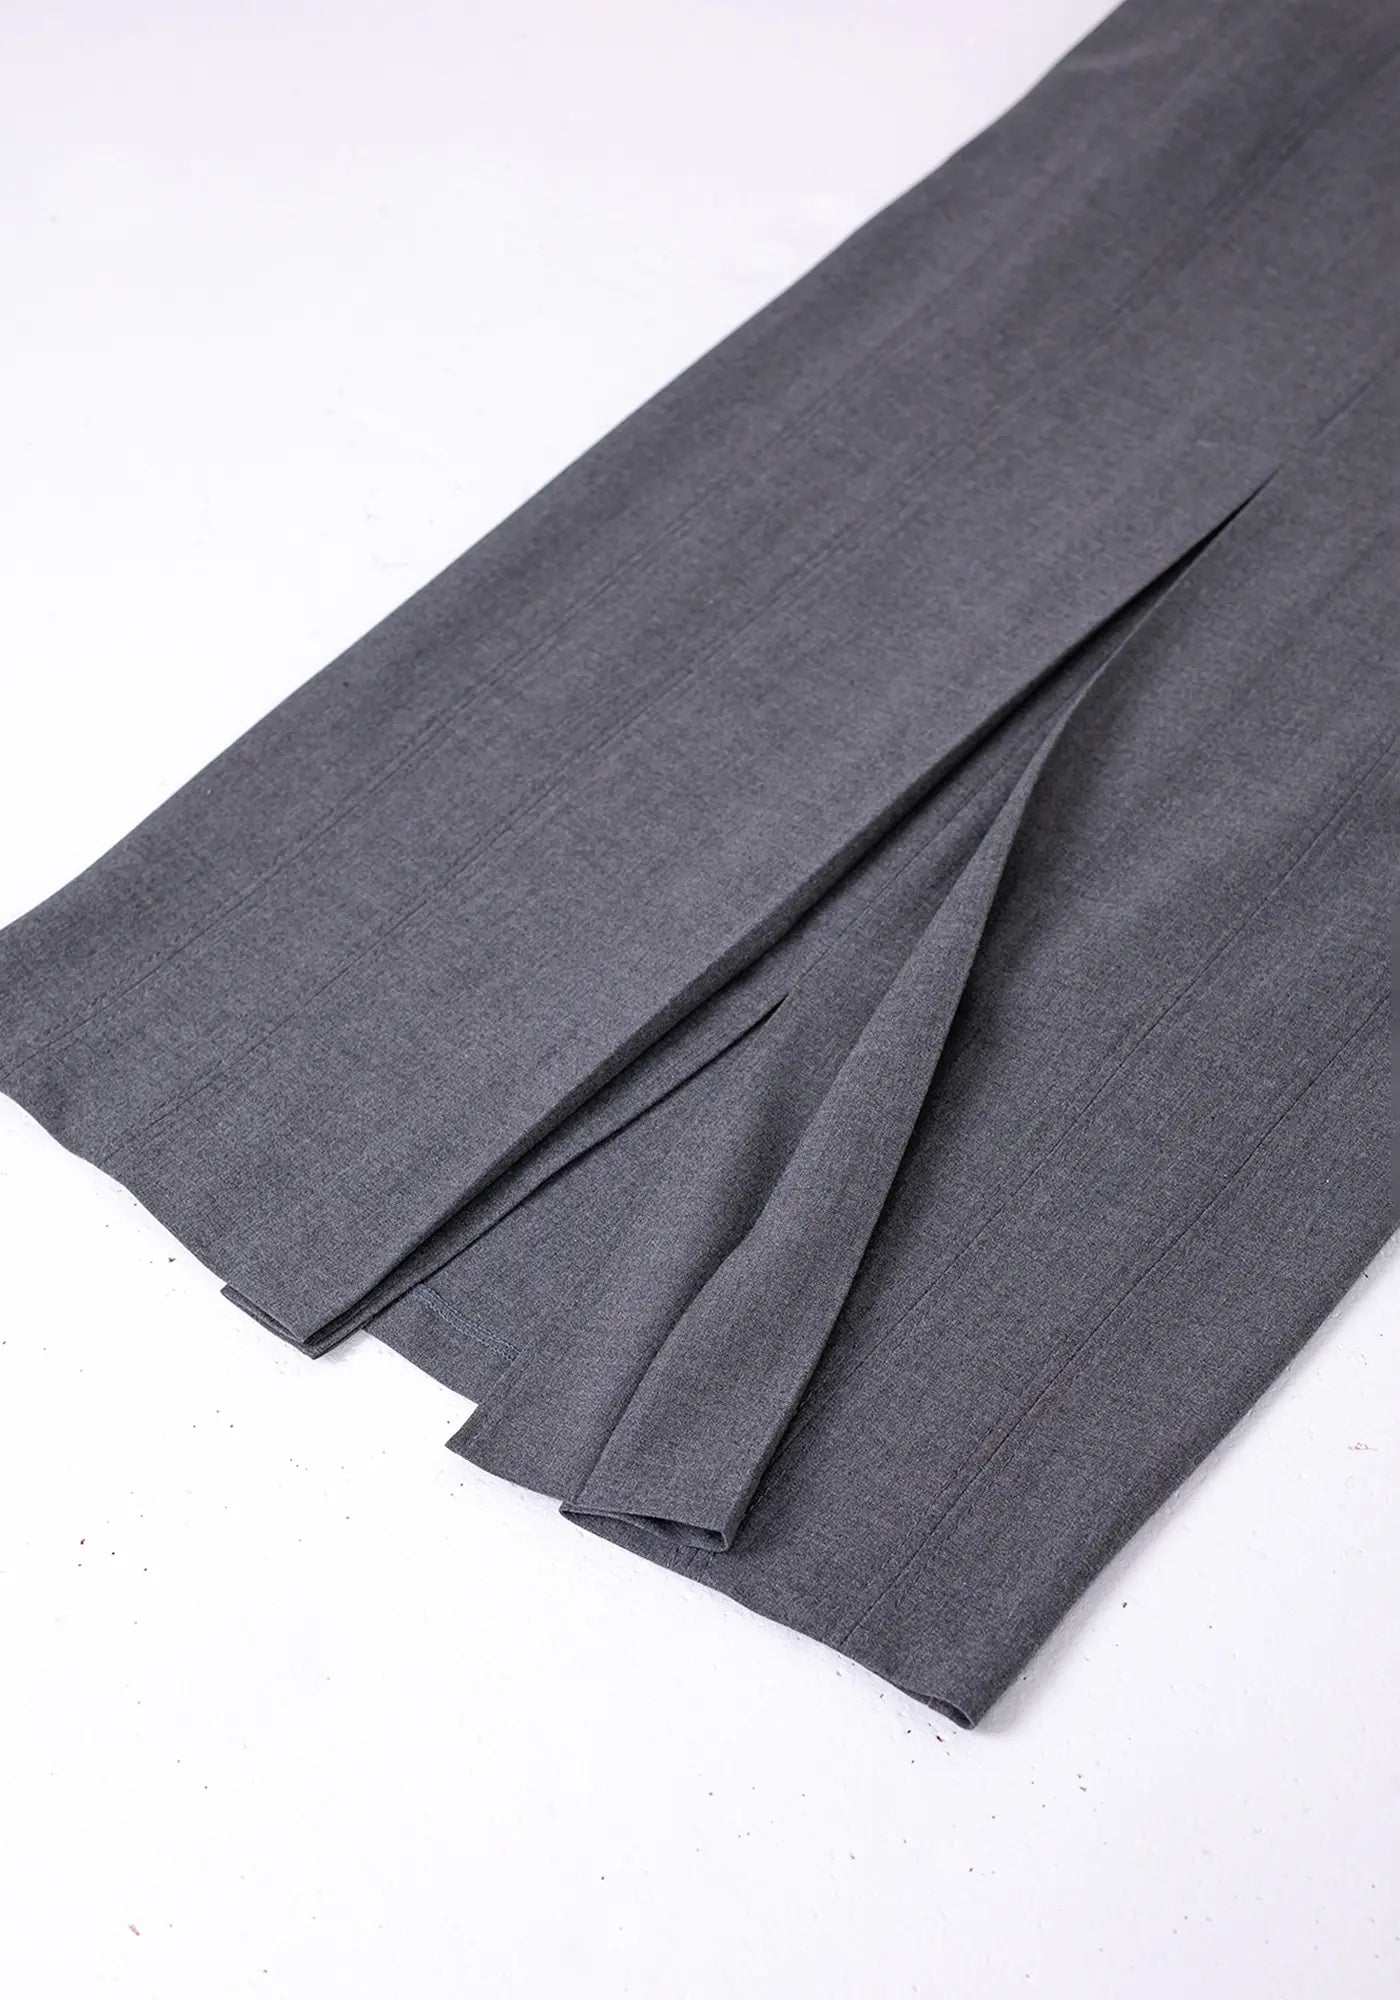 Grey Ankle Length Plus Size Back Split Maxi Skirt G-Line